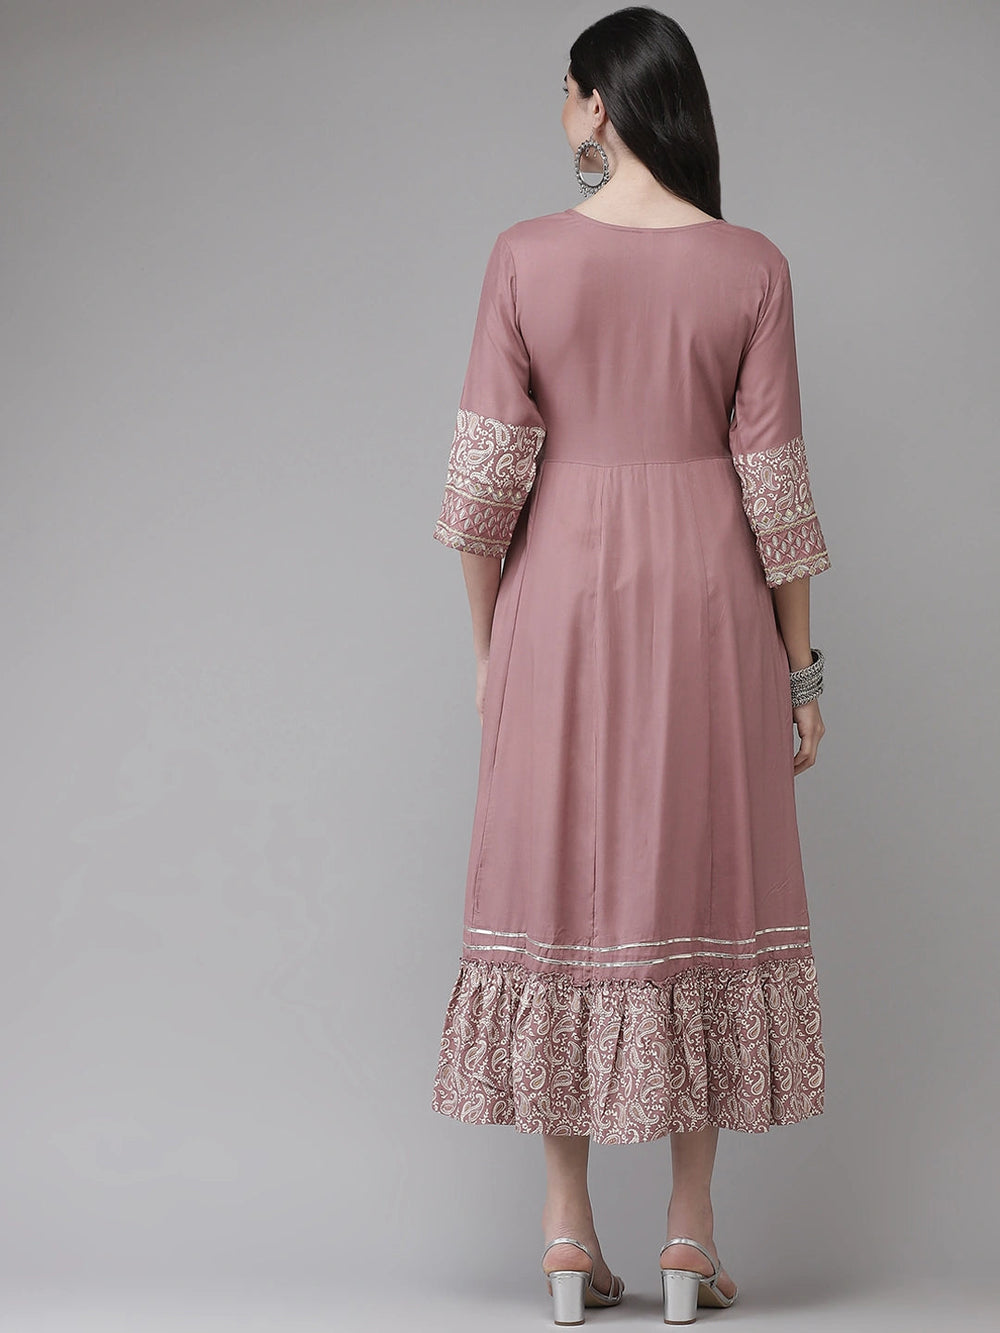 Pink Embroidered Dress-Yufta Store-2119DRSPKM